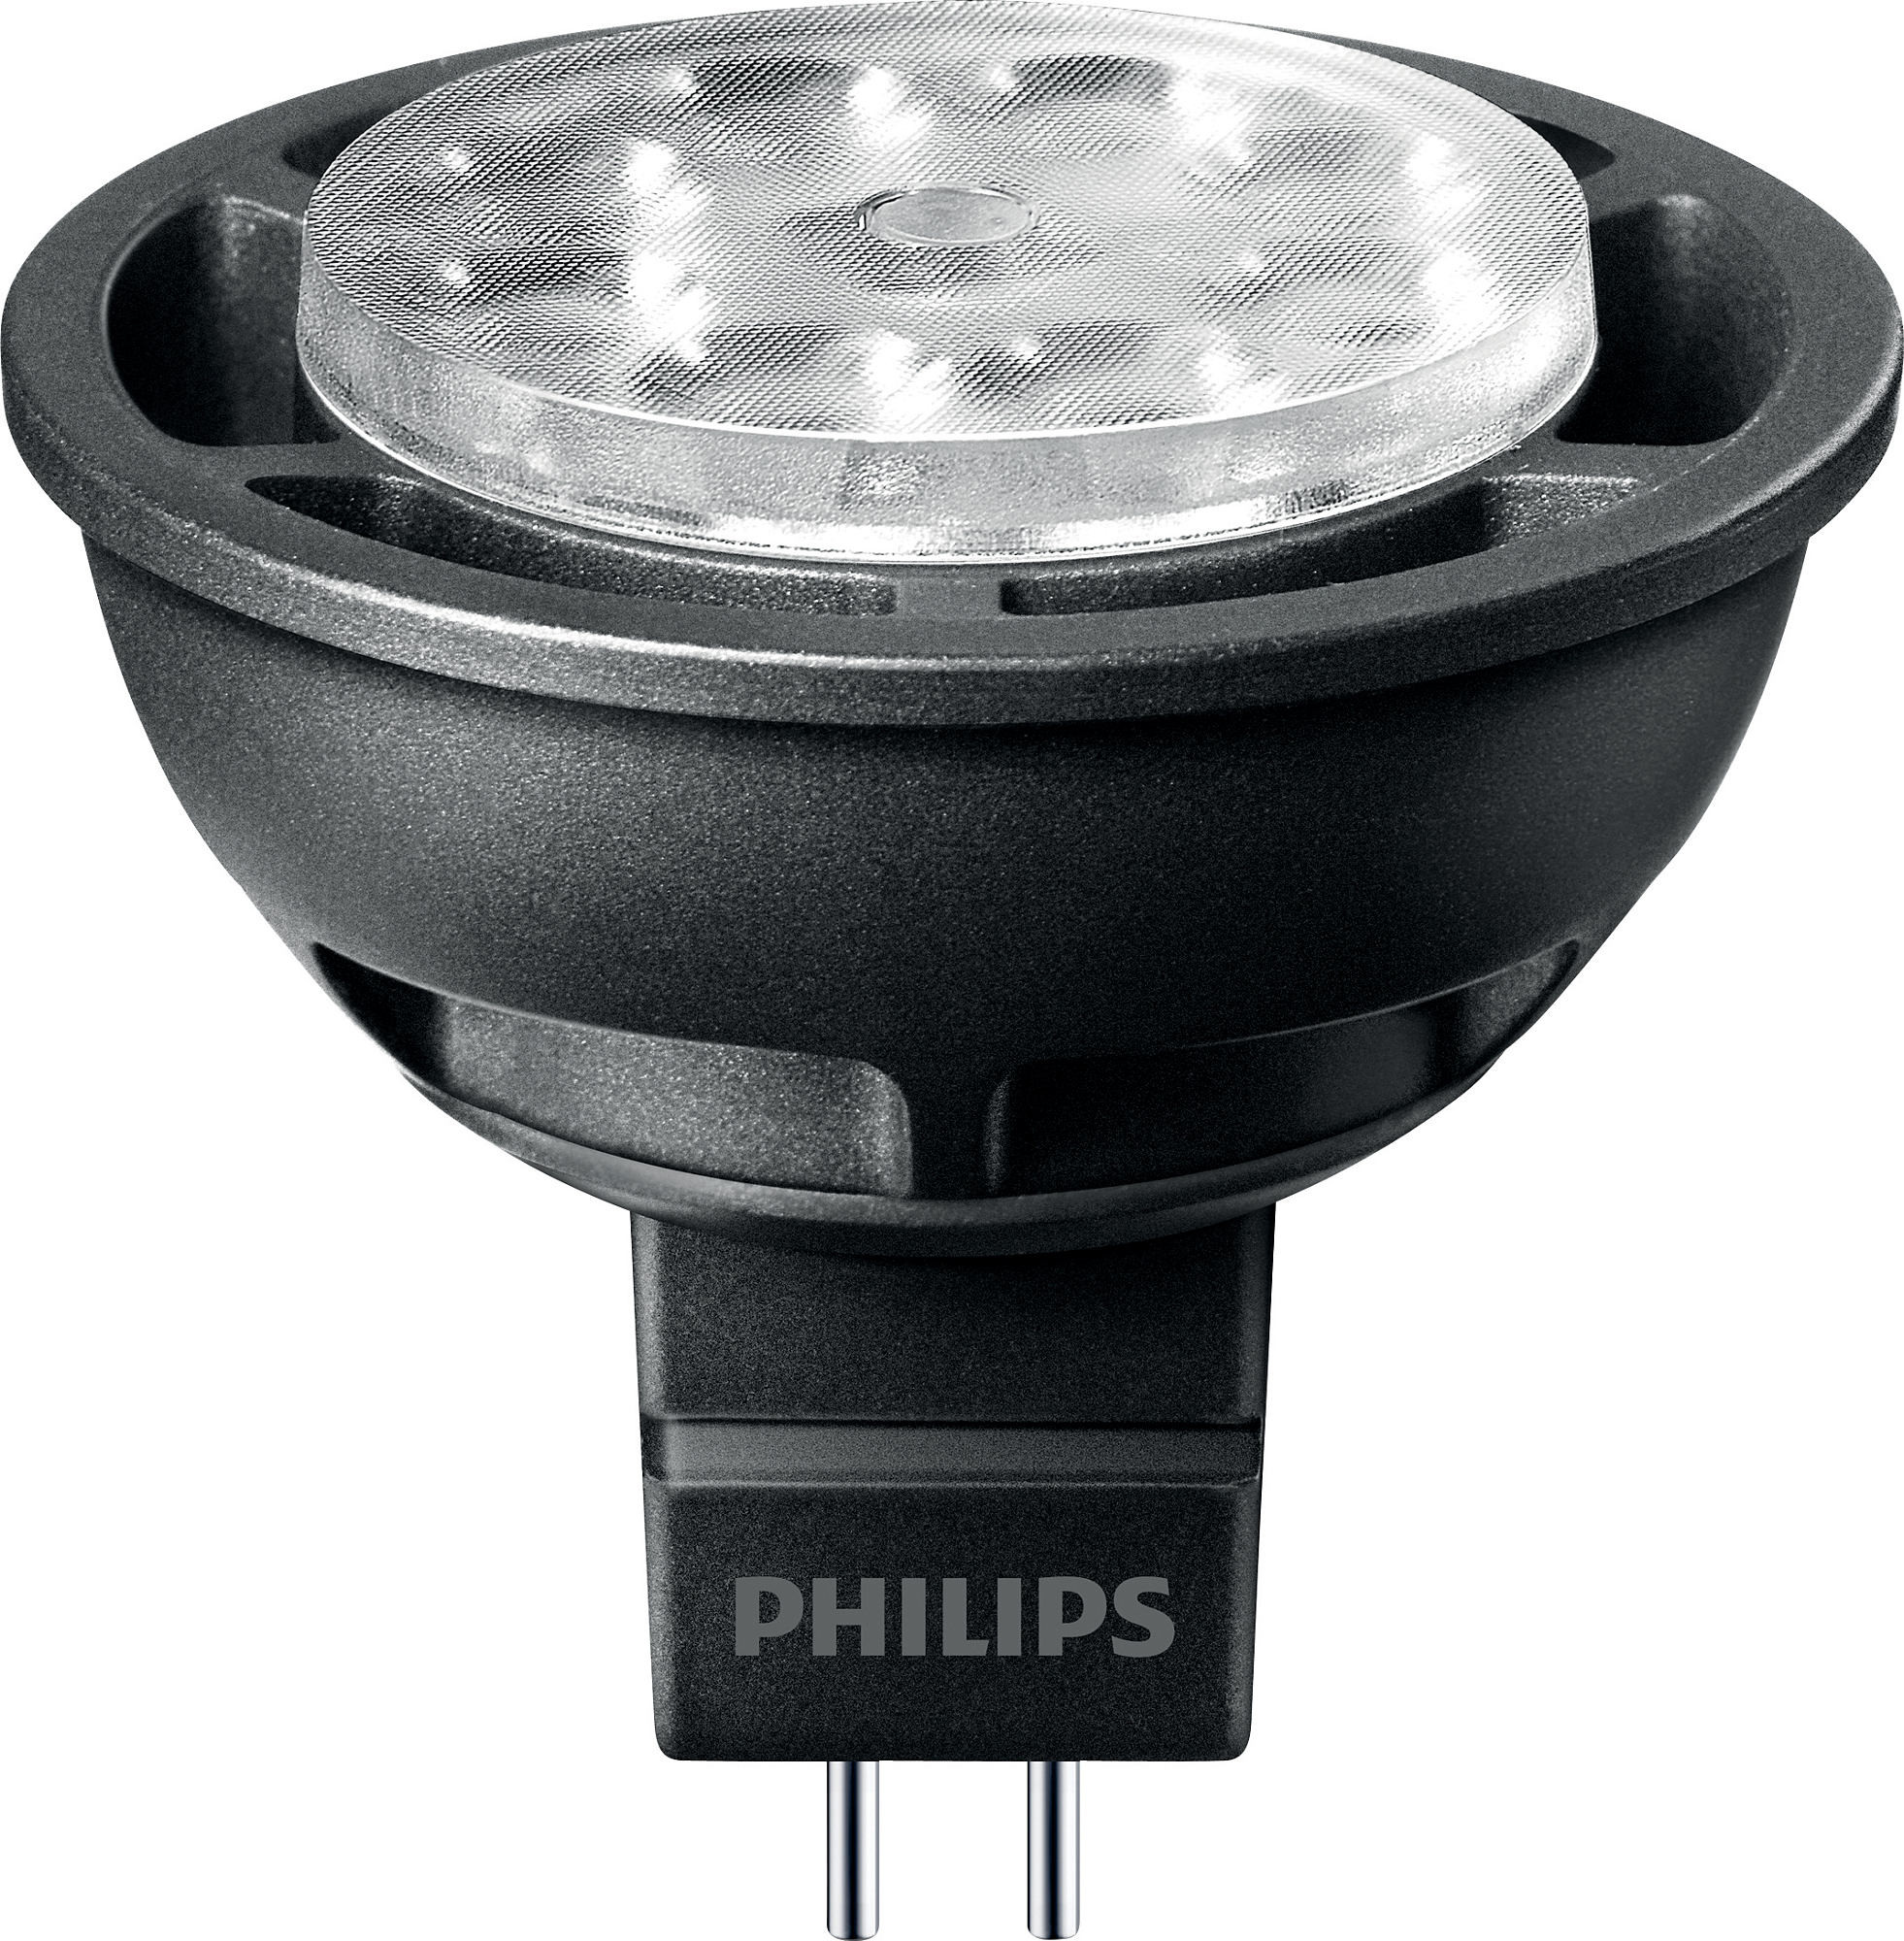 Philips MASTER LEDspotLV Value D 6.5-35W 840 MR16 36D